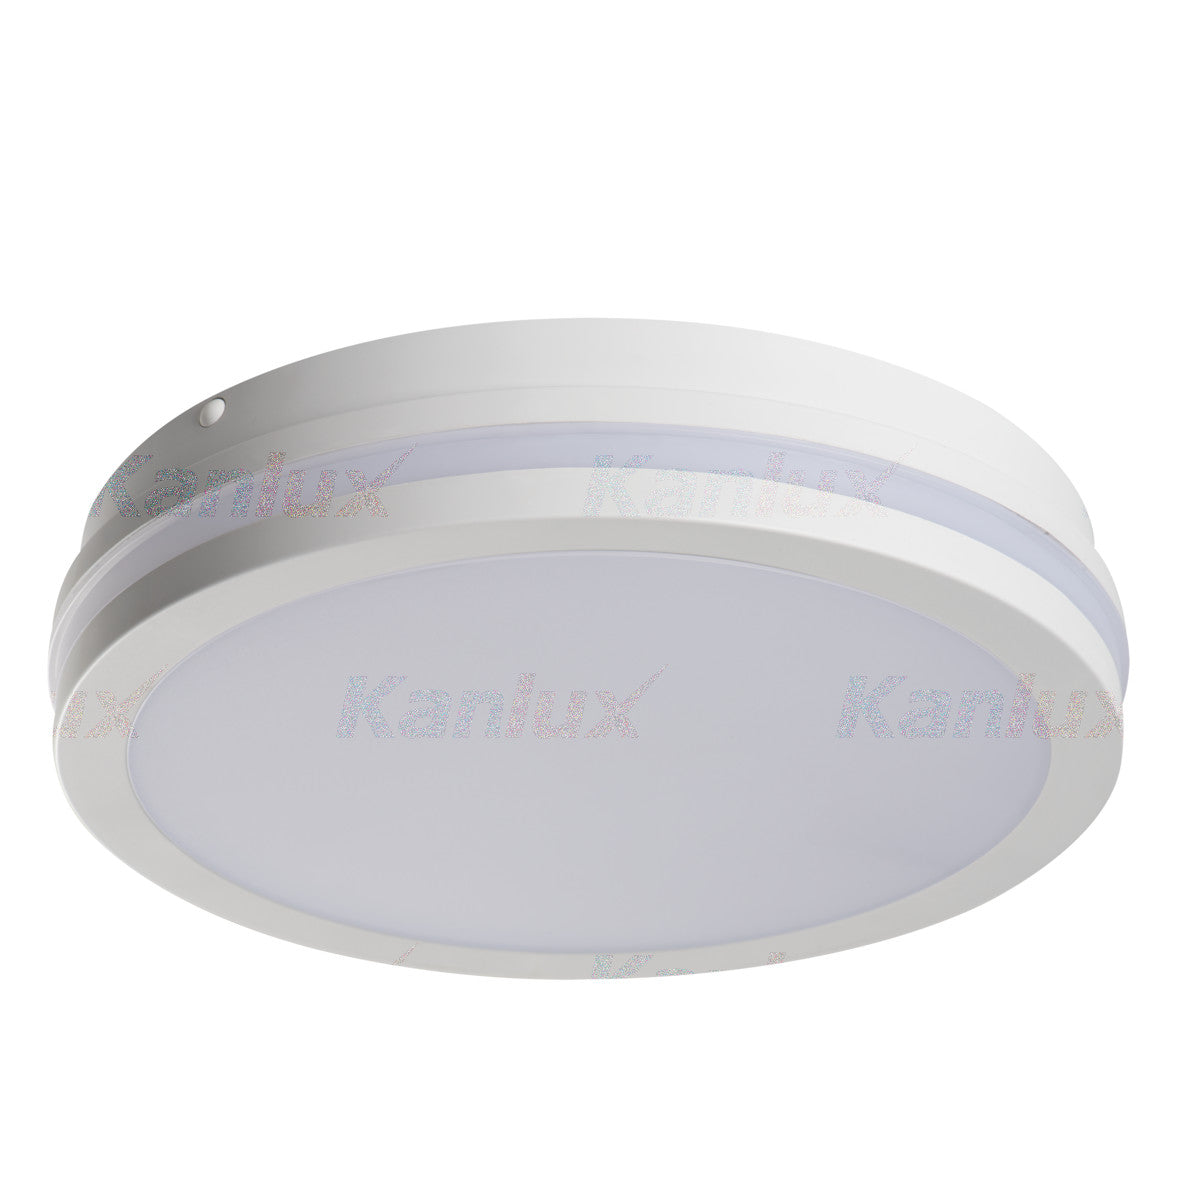 Kanlux BENO IP54 Outdoor Security Bulkhead Wall Fitting LED Light Bulb Motion Sensor best downlight